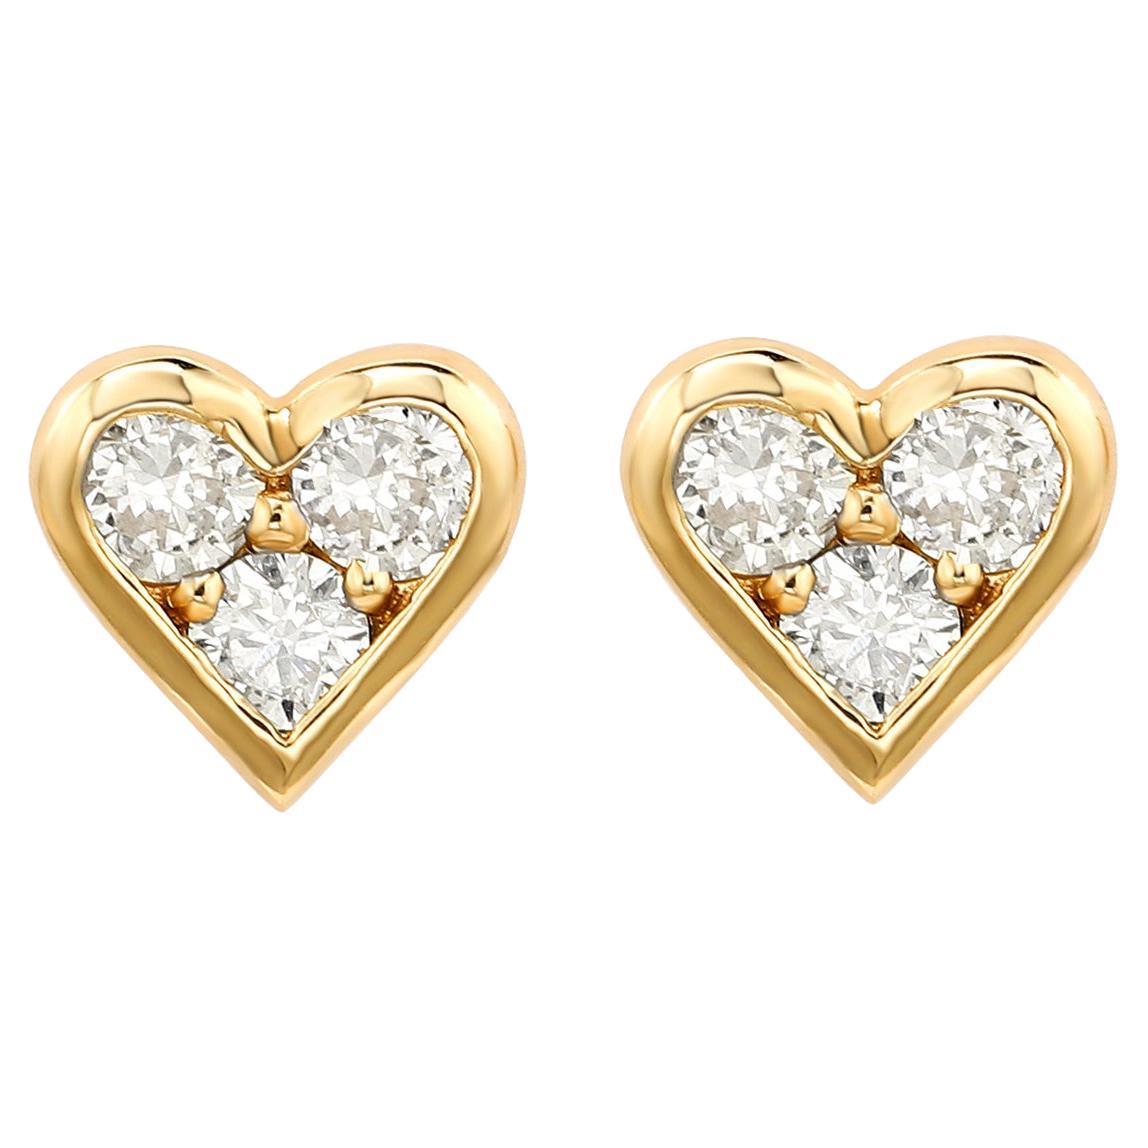 Suzy Levian 14K Yellow Gold 0.30 CTTW Diamond Heart Earrings For Sale